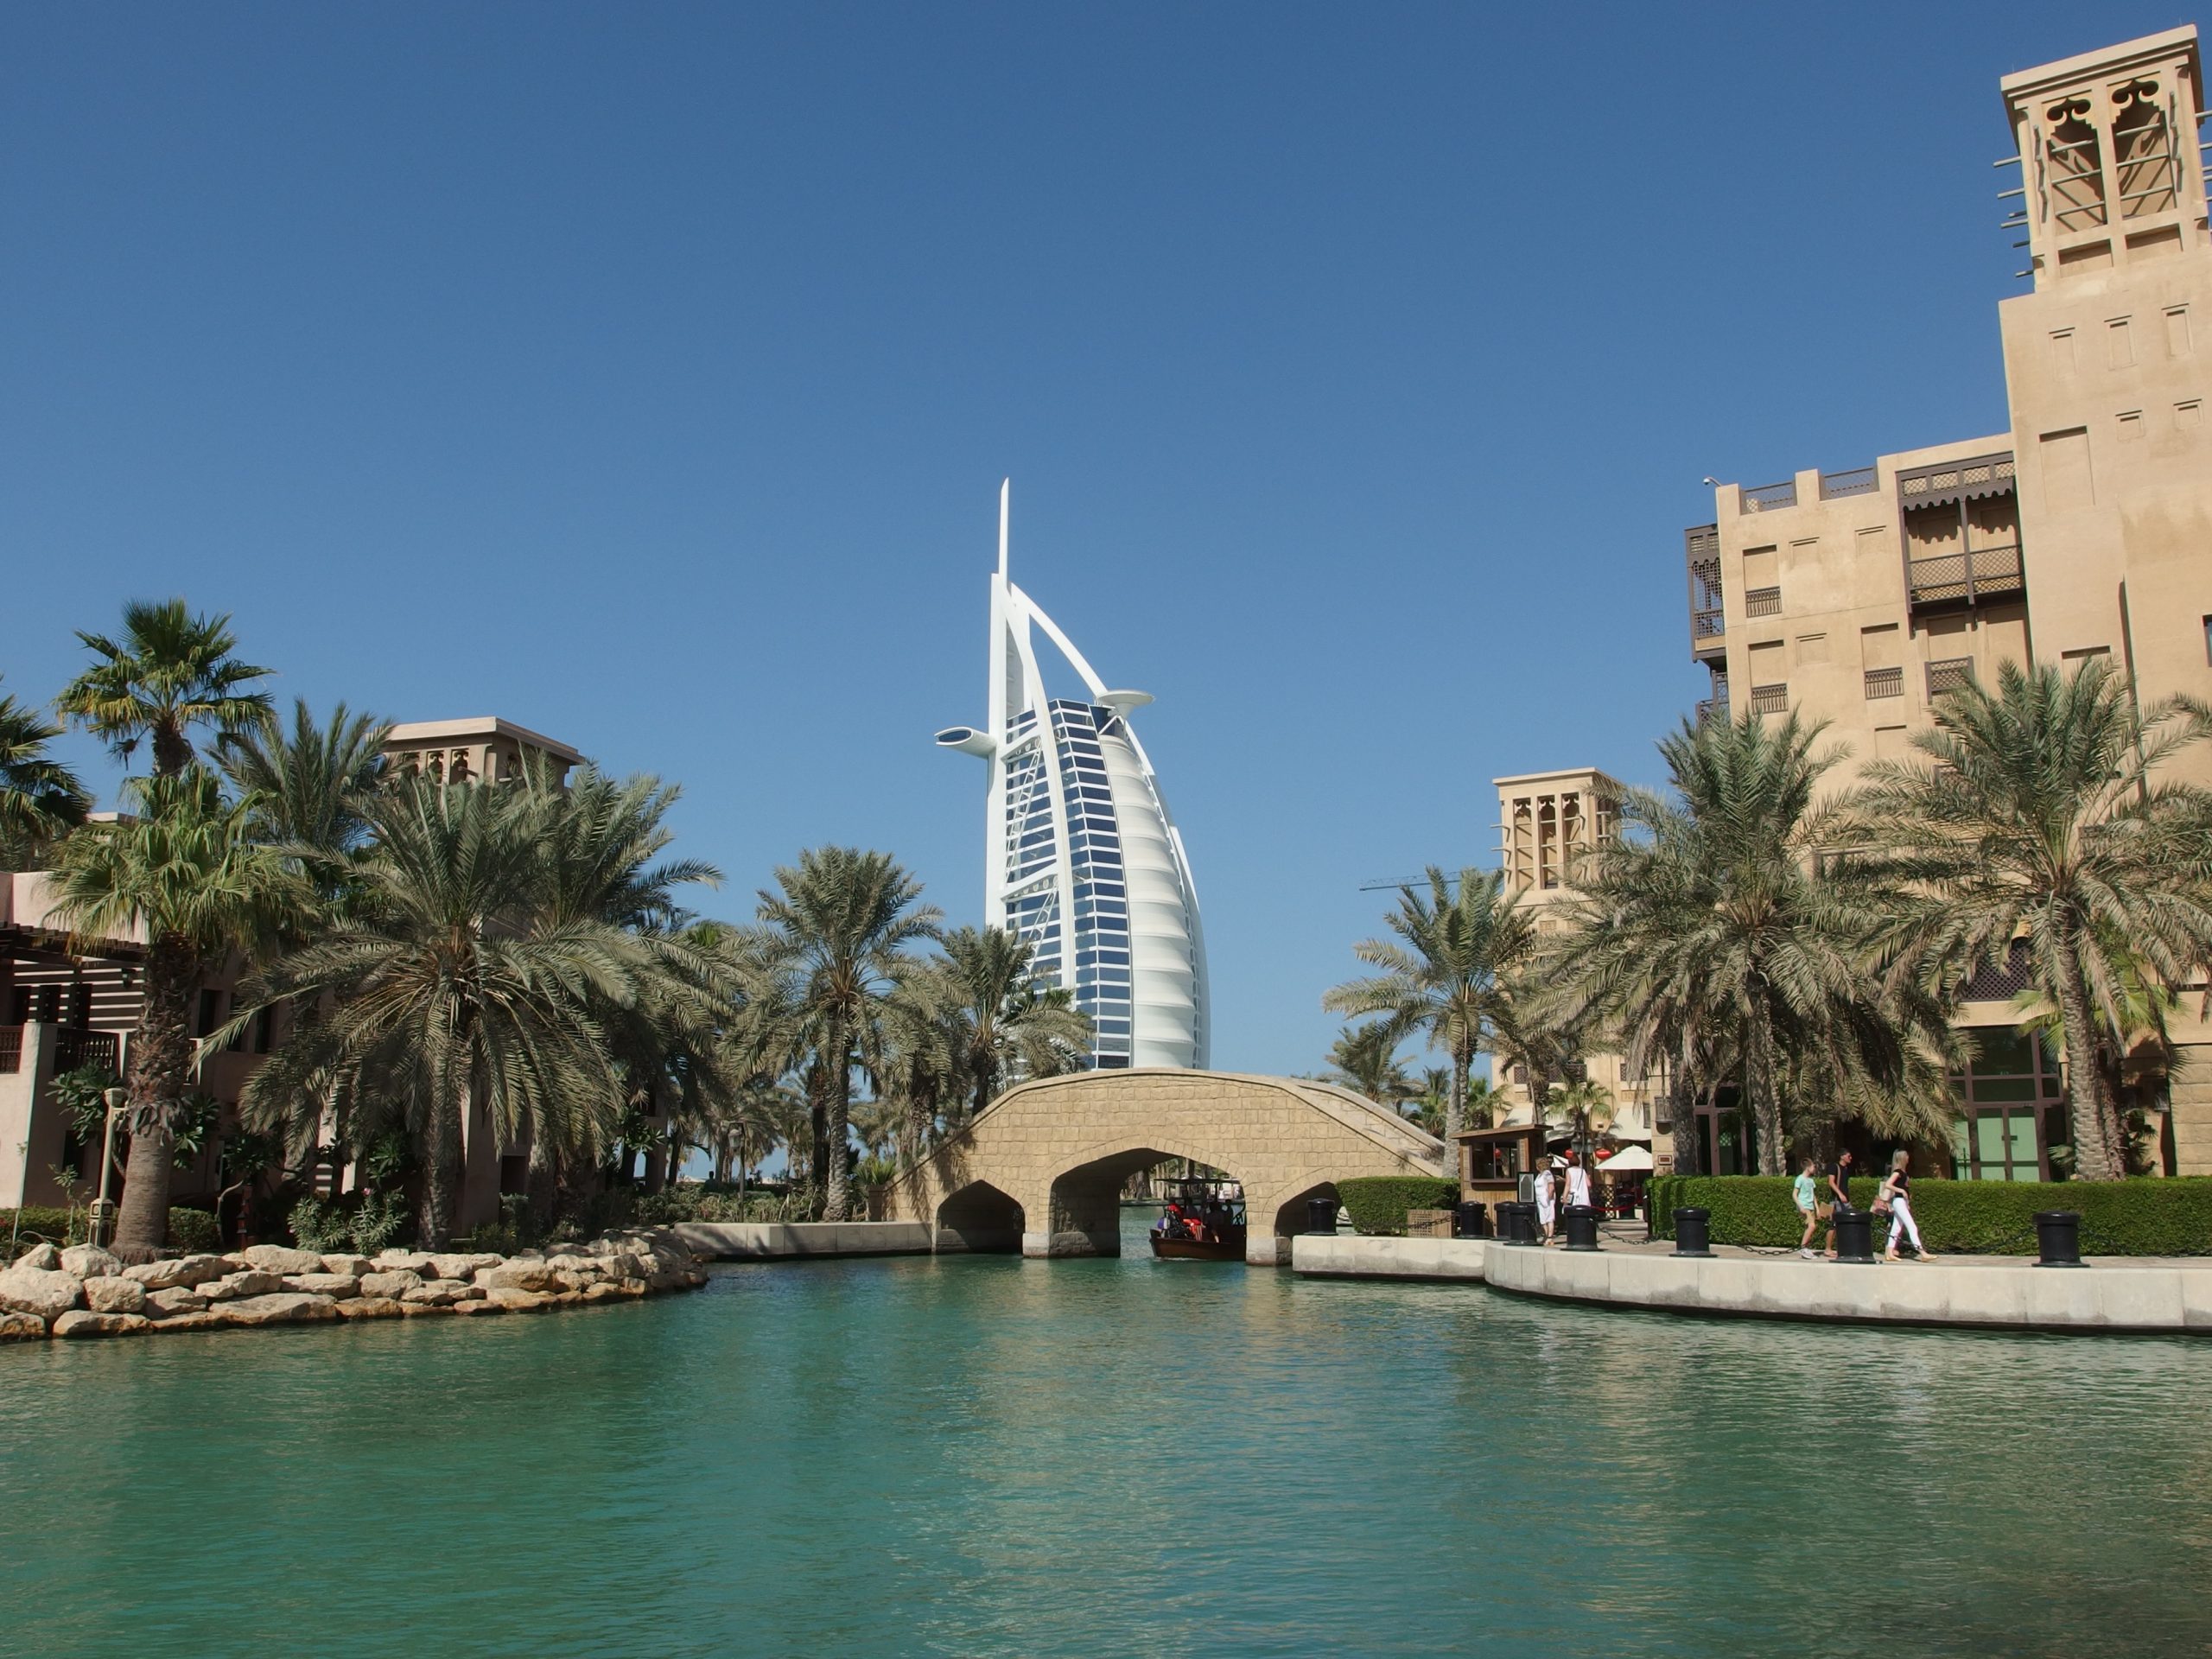 Burj Al Arab, Dubai's most iconic hotel